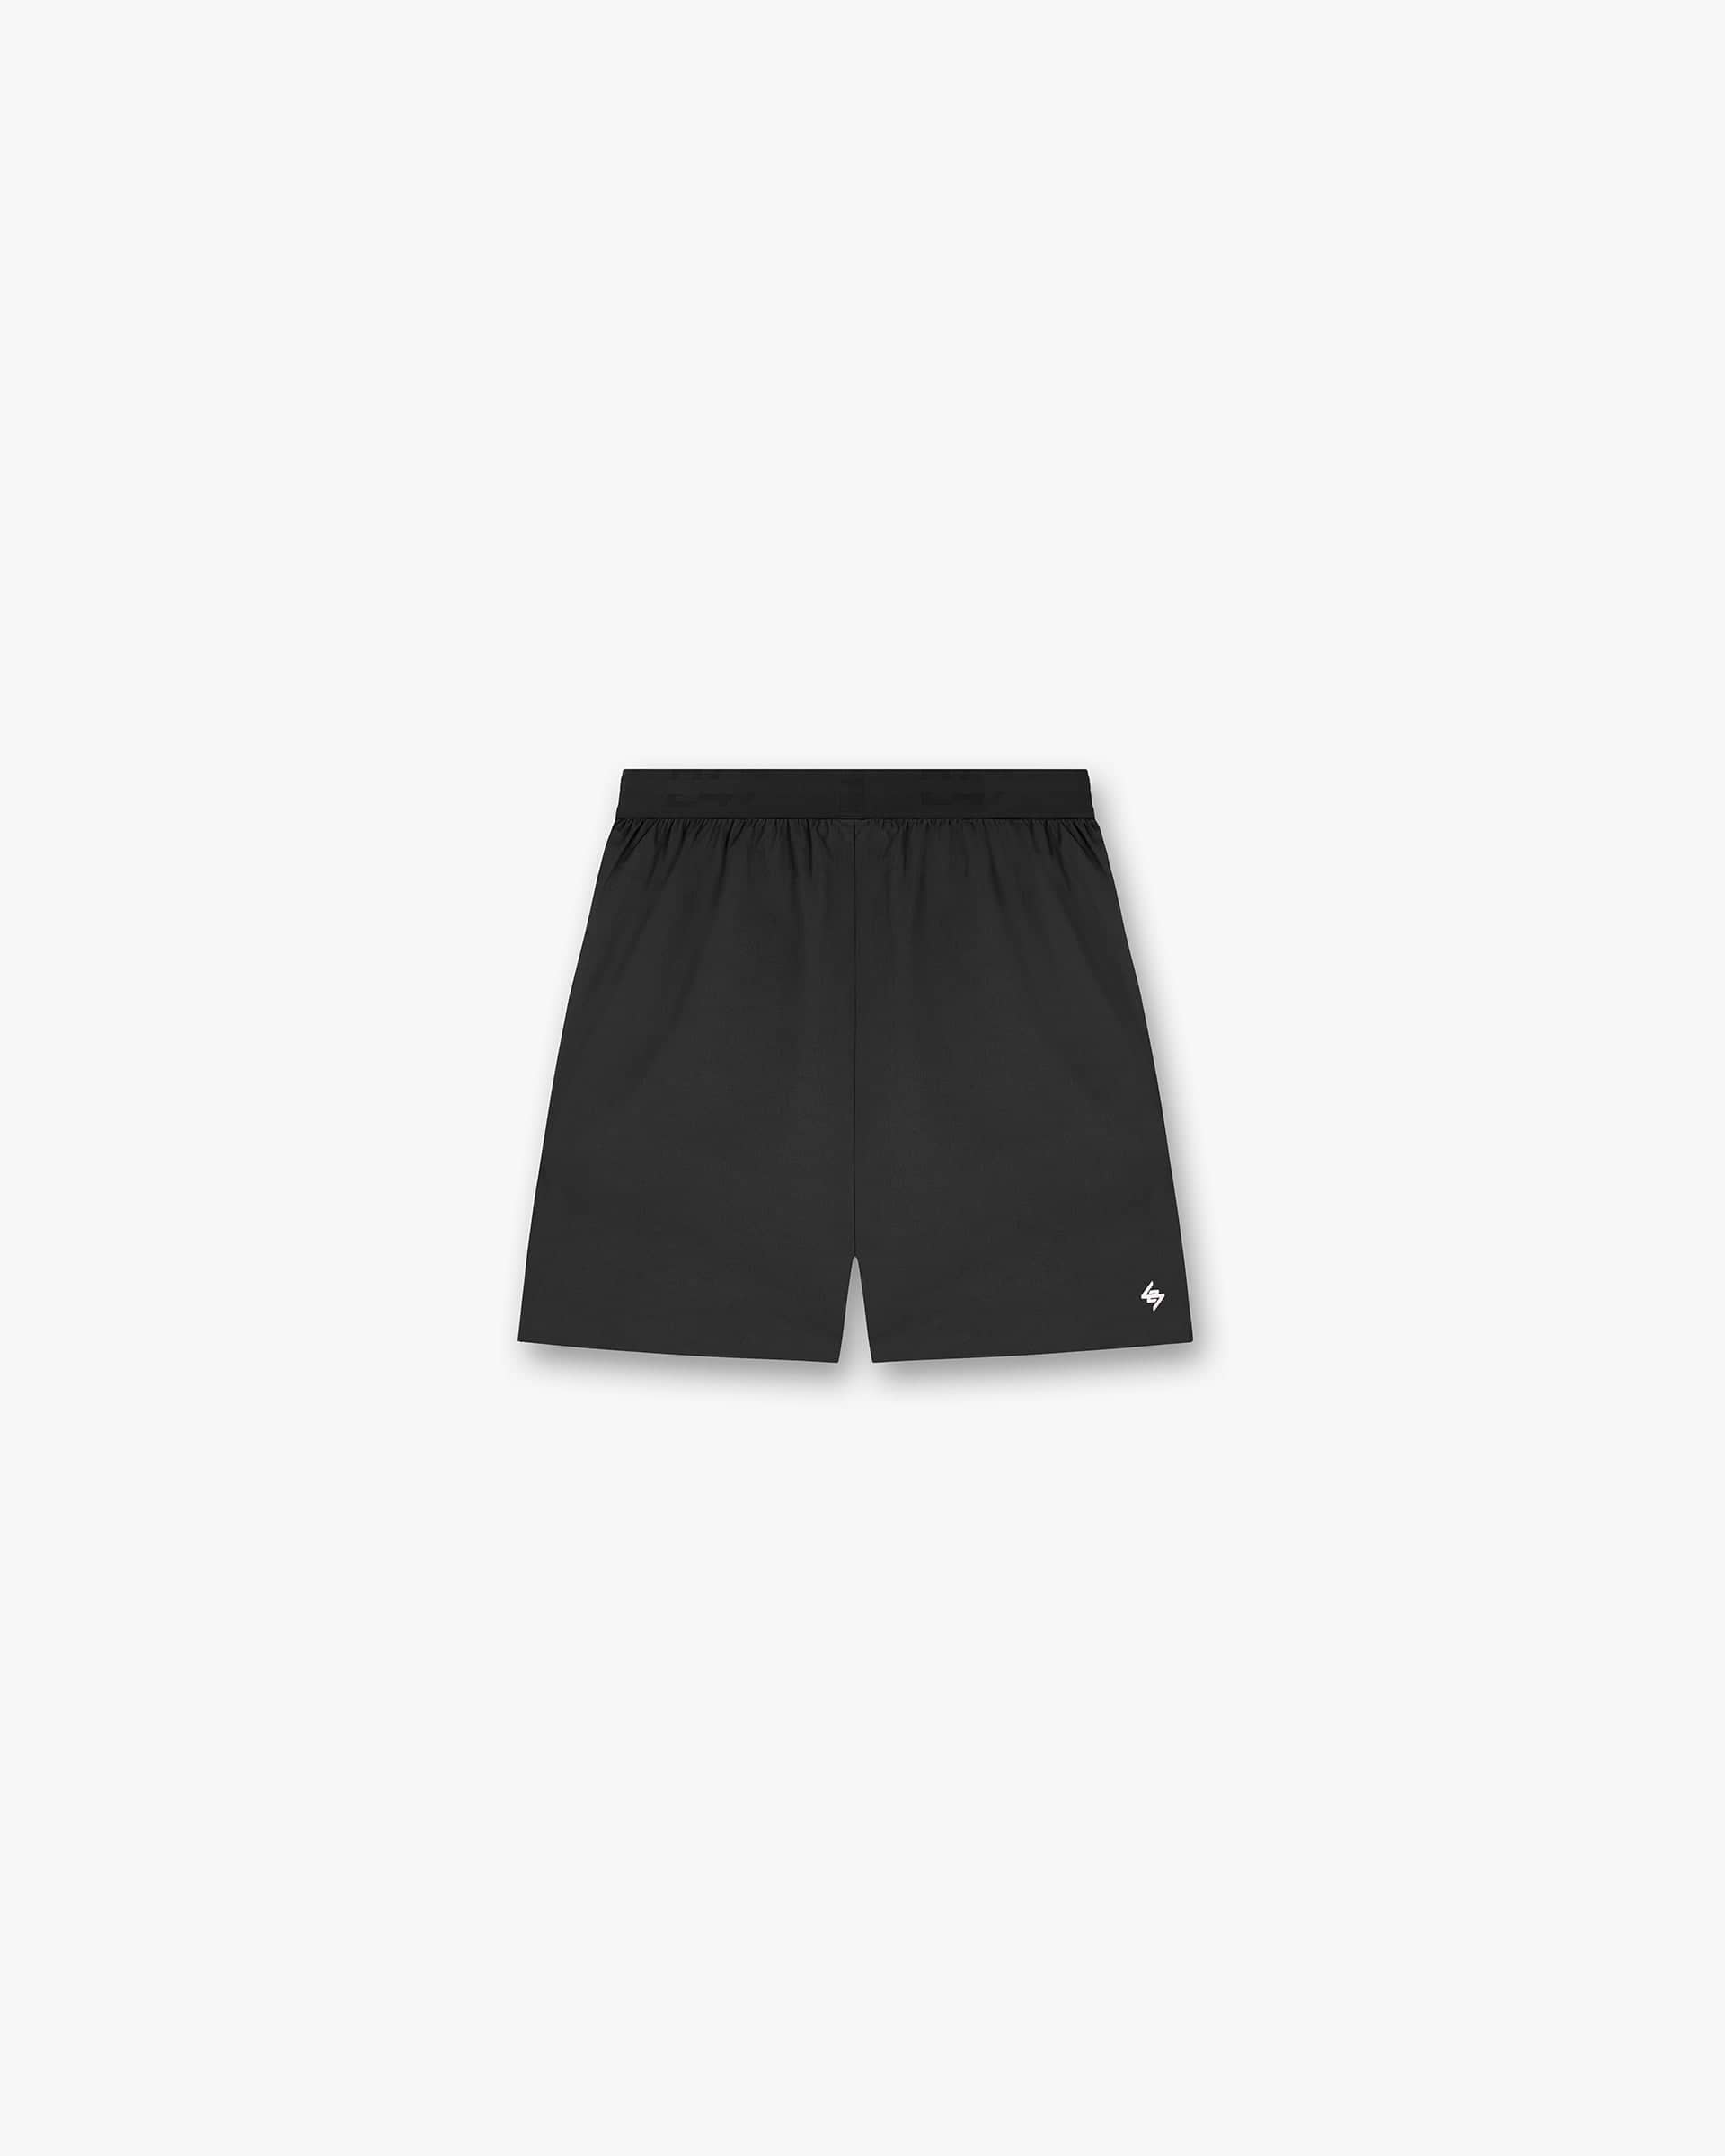 Represent 247 Fused Shorts Black